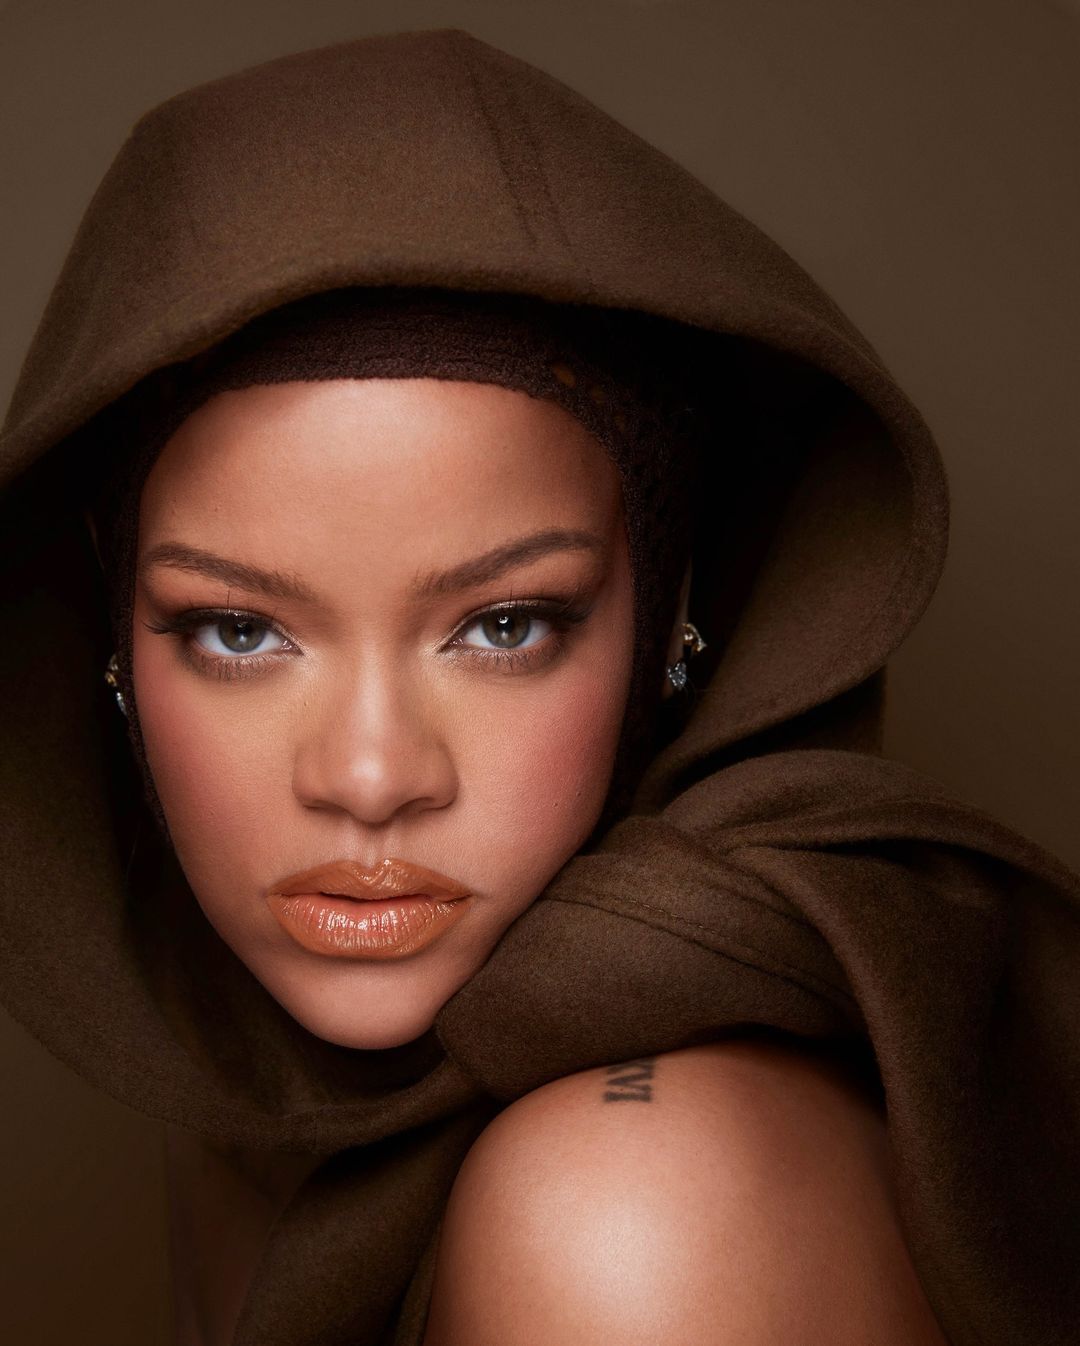 Another world star spotted wearing Ukrainian brand: Rihanna's new photos look stunning